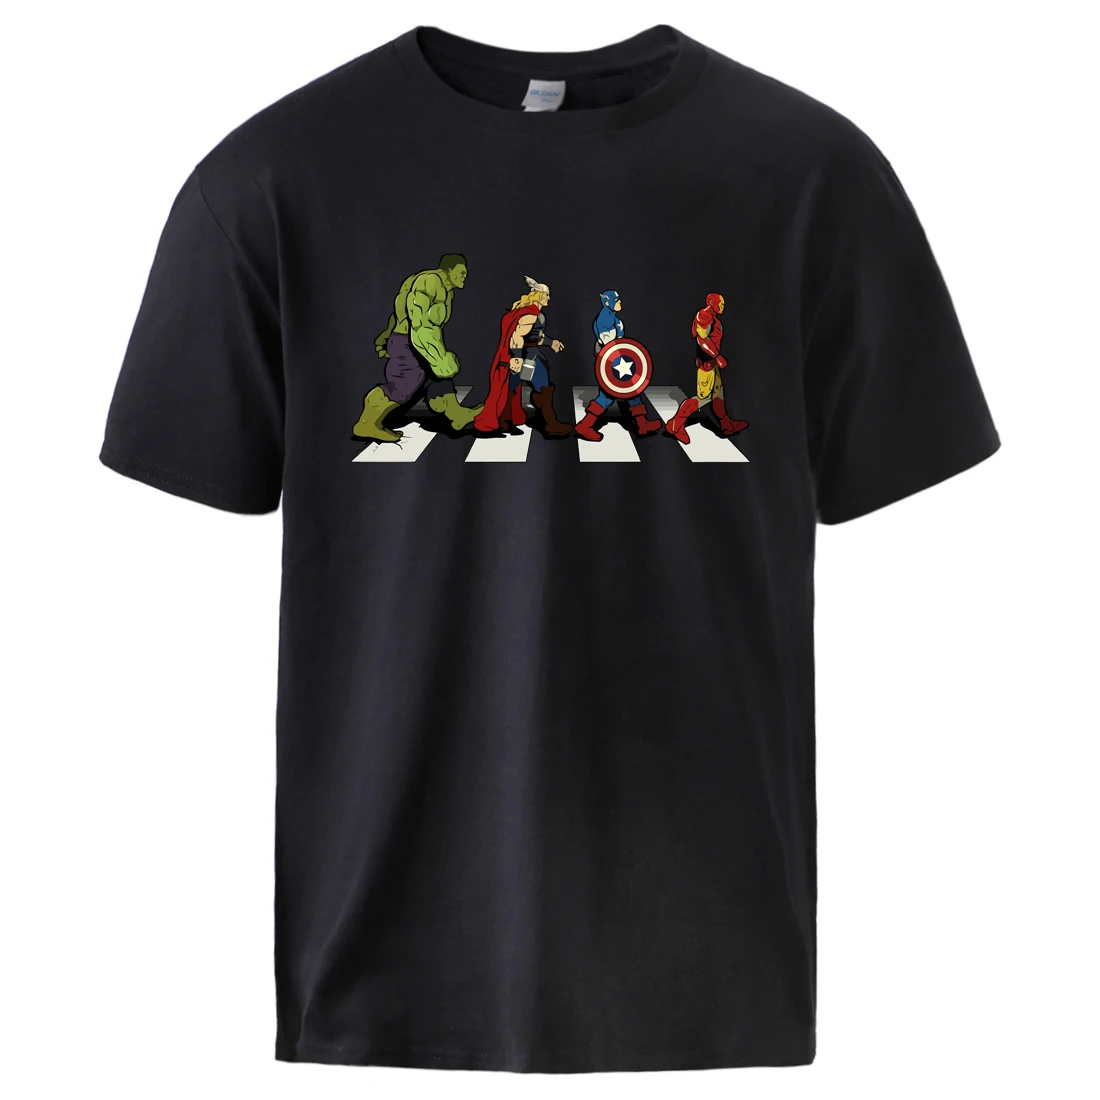 Superhero T shirts The Avengers Mens Summer Tops Fashion Short Sleeve Casual Sportswear Cool Marvel Print T shirts Plus Black